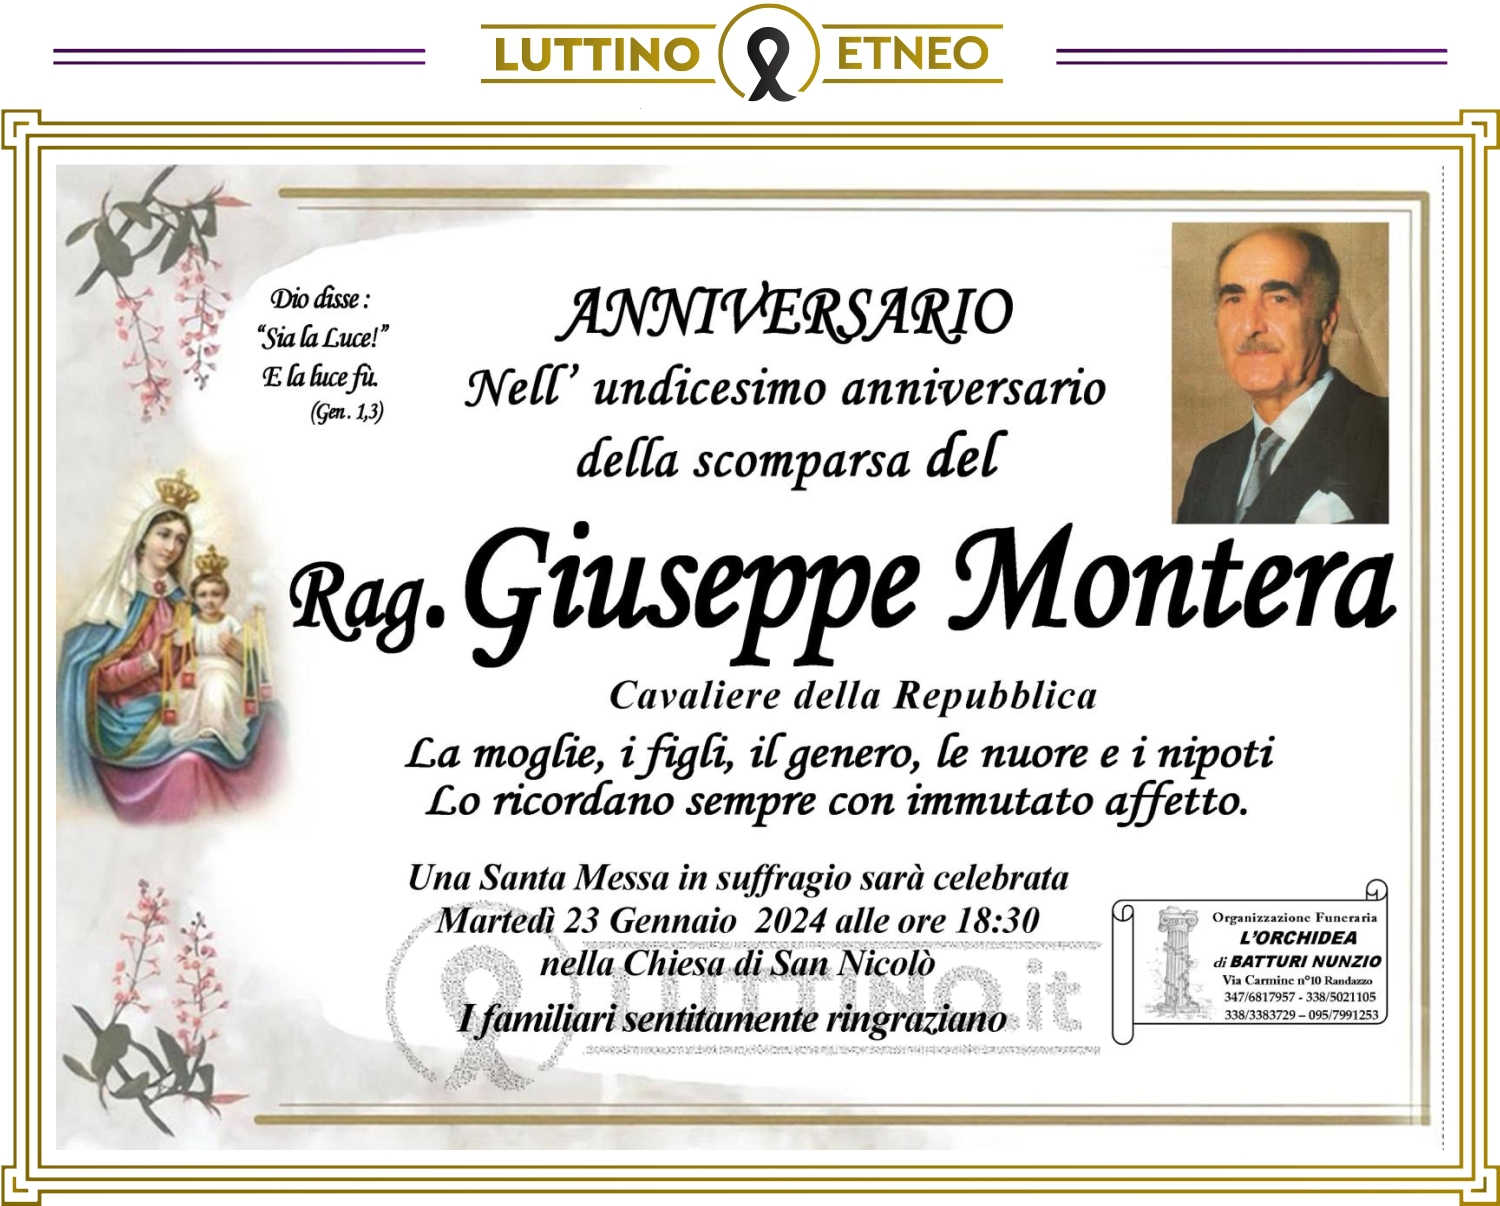 Giuseppe Montera